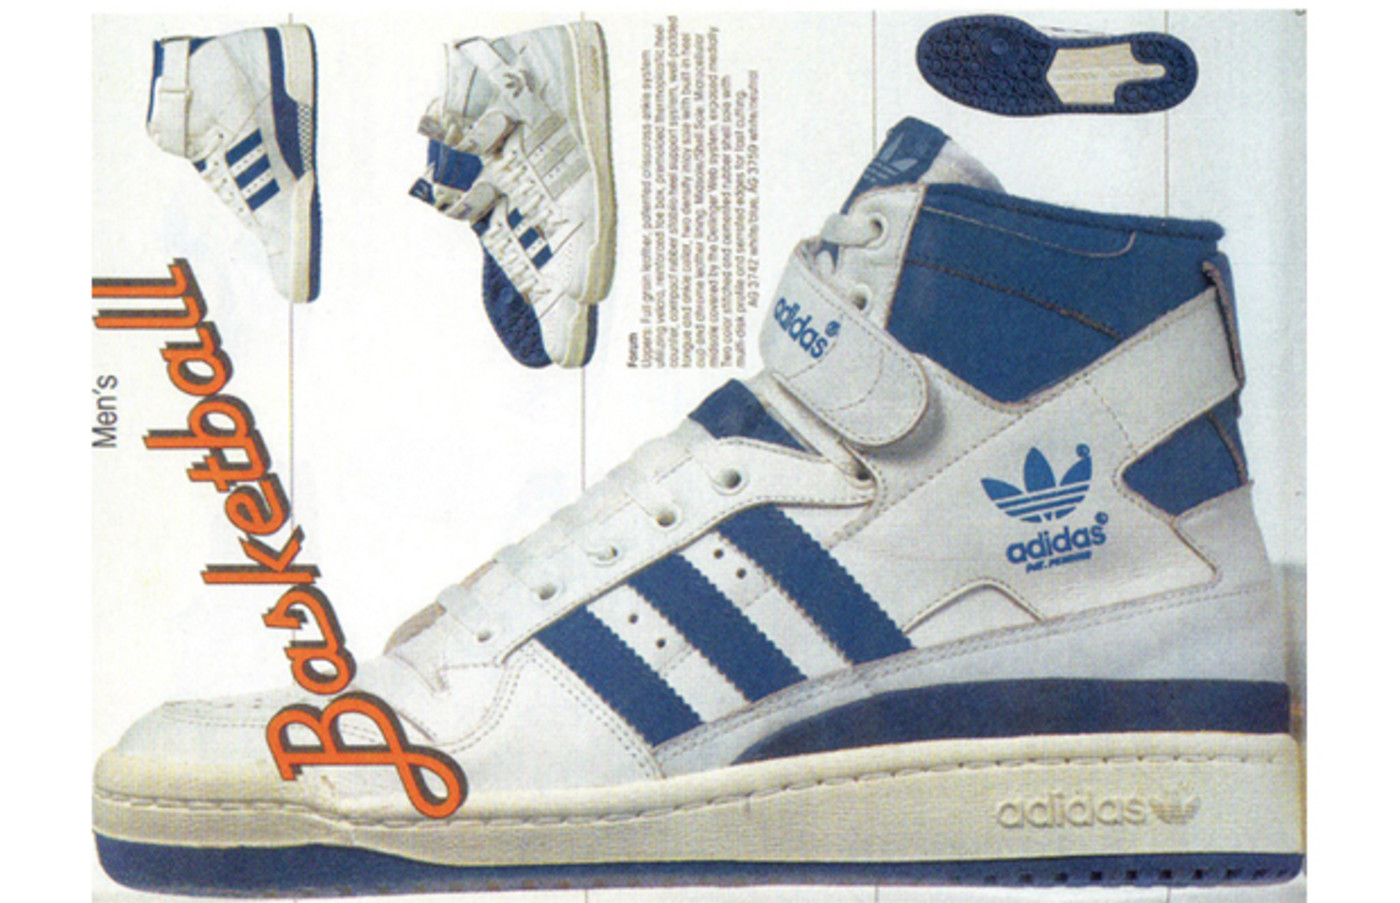 1983 adidas shoes